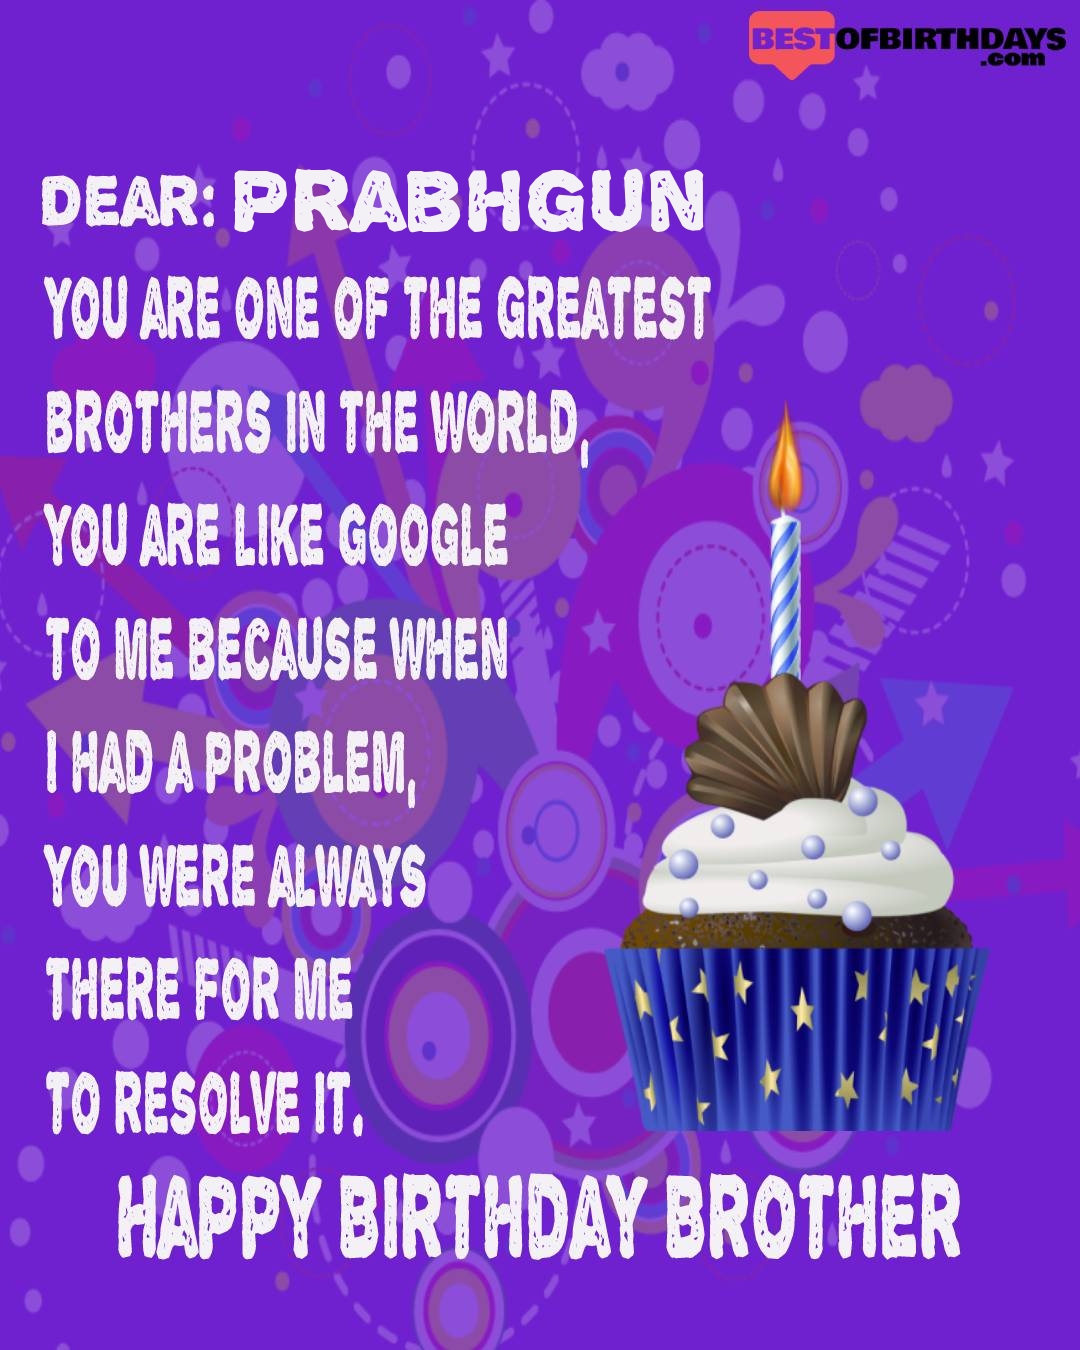 Happy birthday prabhgun bhai brother bro